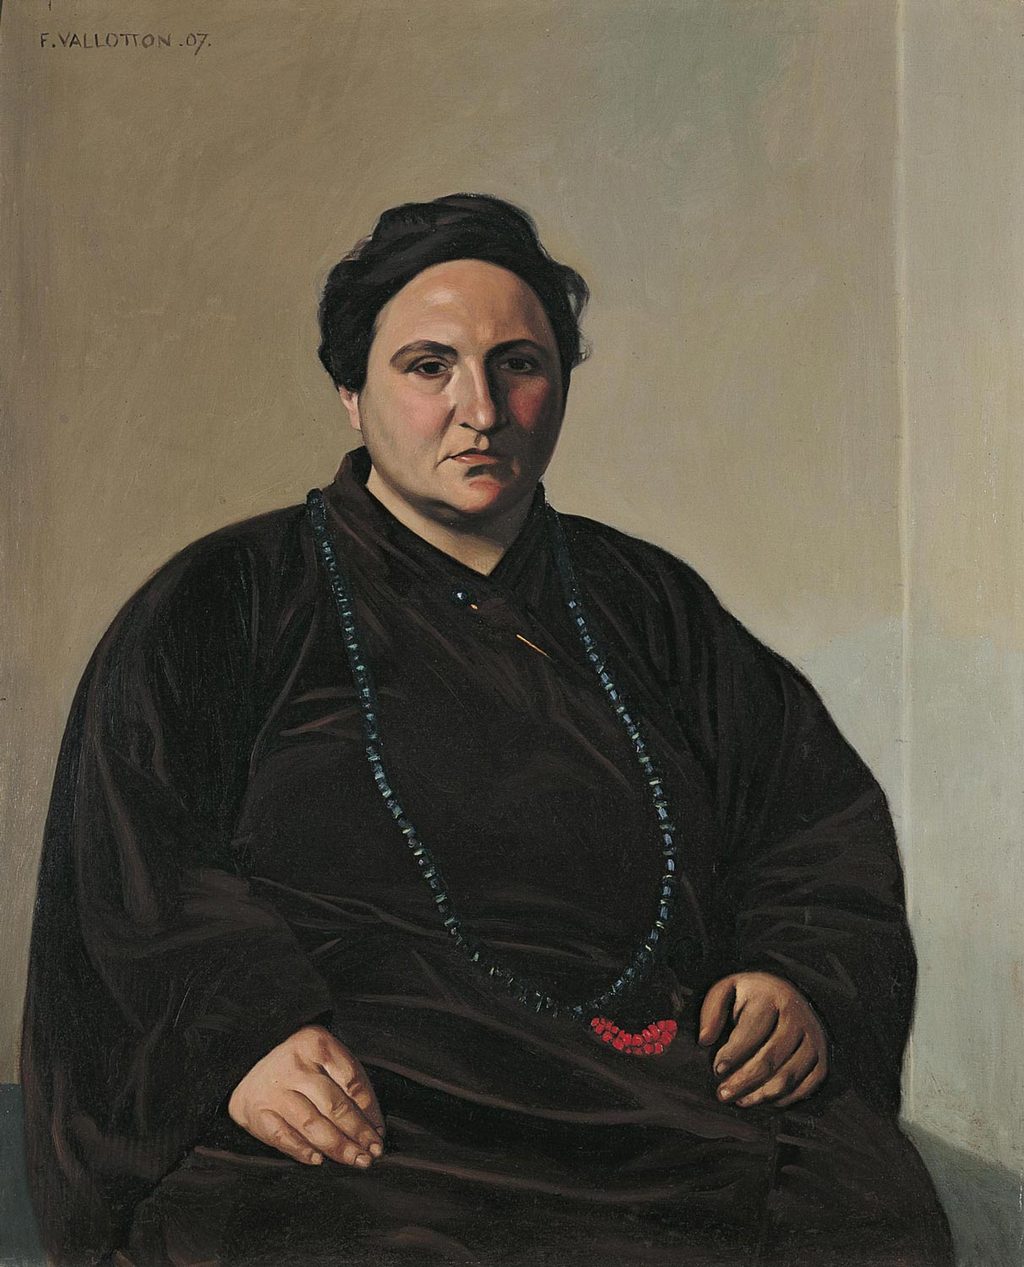 Félix Vallotton, Gertrude Stein, 1907, huile sur toile, 100,3 x 81,3 cm. Baltimore, The Baltimore Museum of Art, The Cone Collection ©